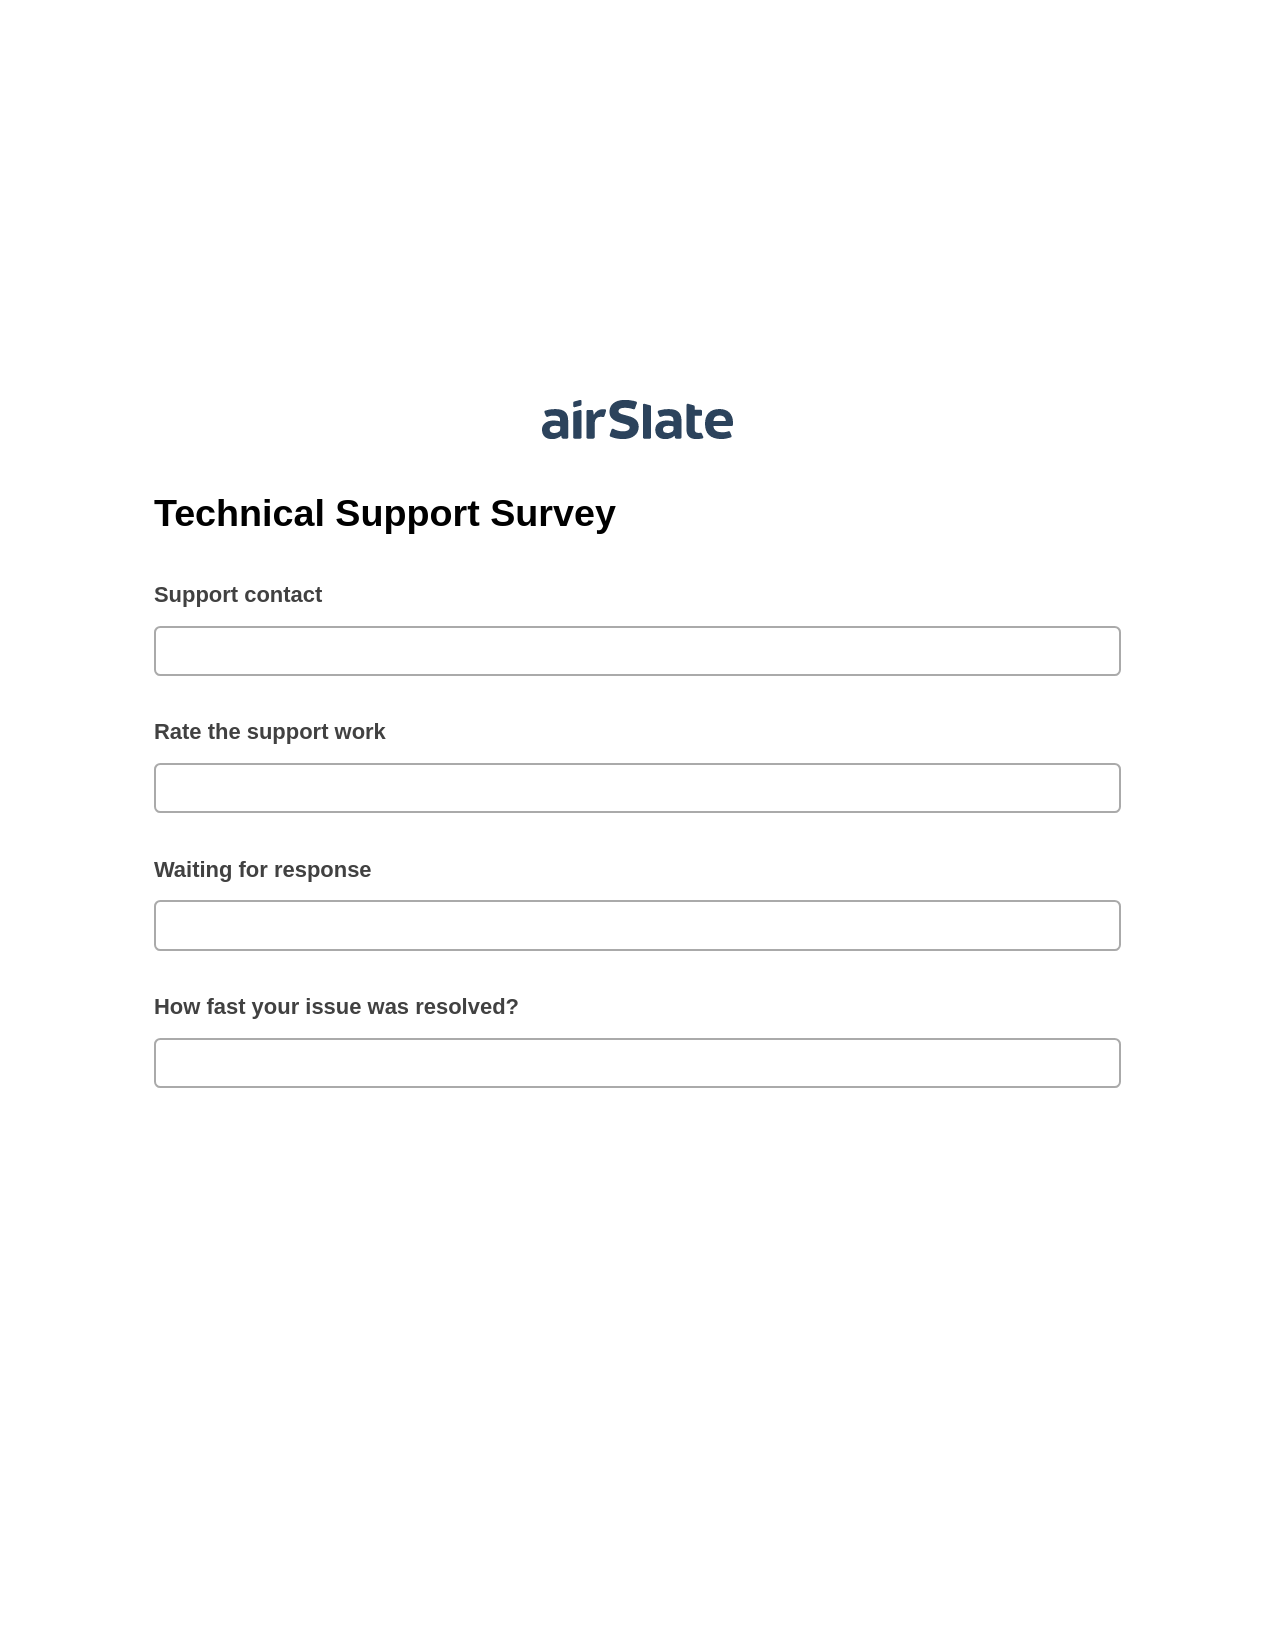 Technical Support Survey Pre-fill Dropdowns from CSV file Bot, Create QuickBooks Invoice Bot, Slack Notification Postfinish Bot